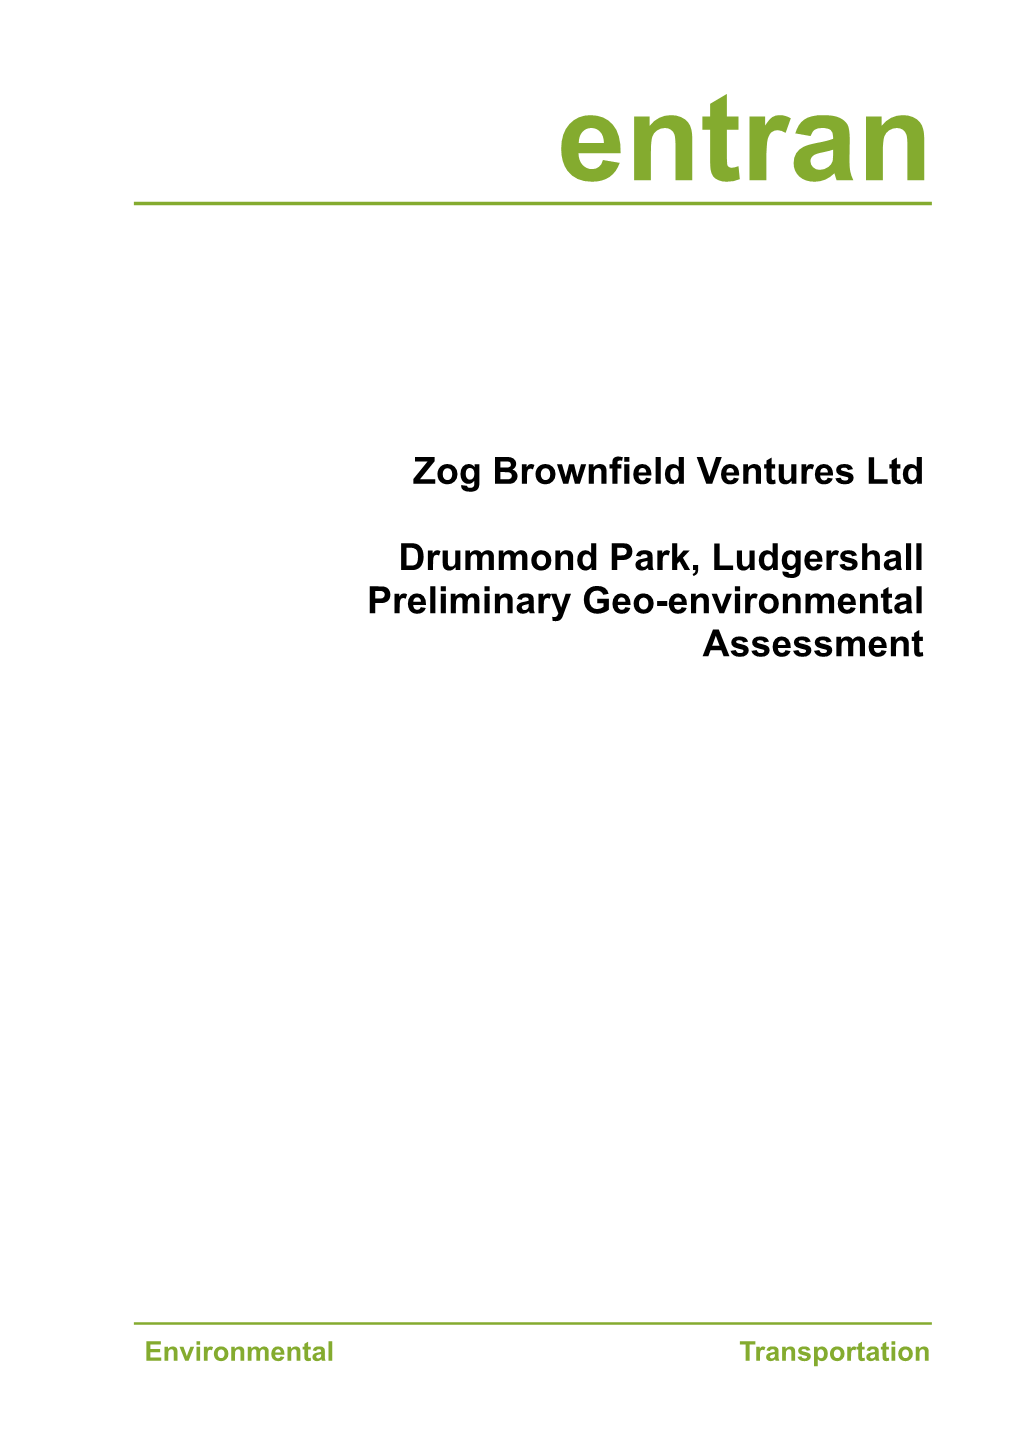 Zog Brownfield Ventures Ltd Drummond Park, Ludgershall Preliminary Geo-Environmental Assessment